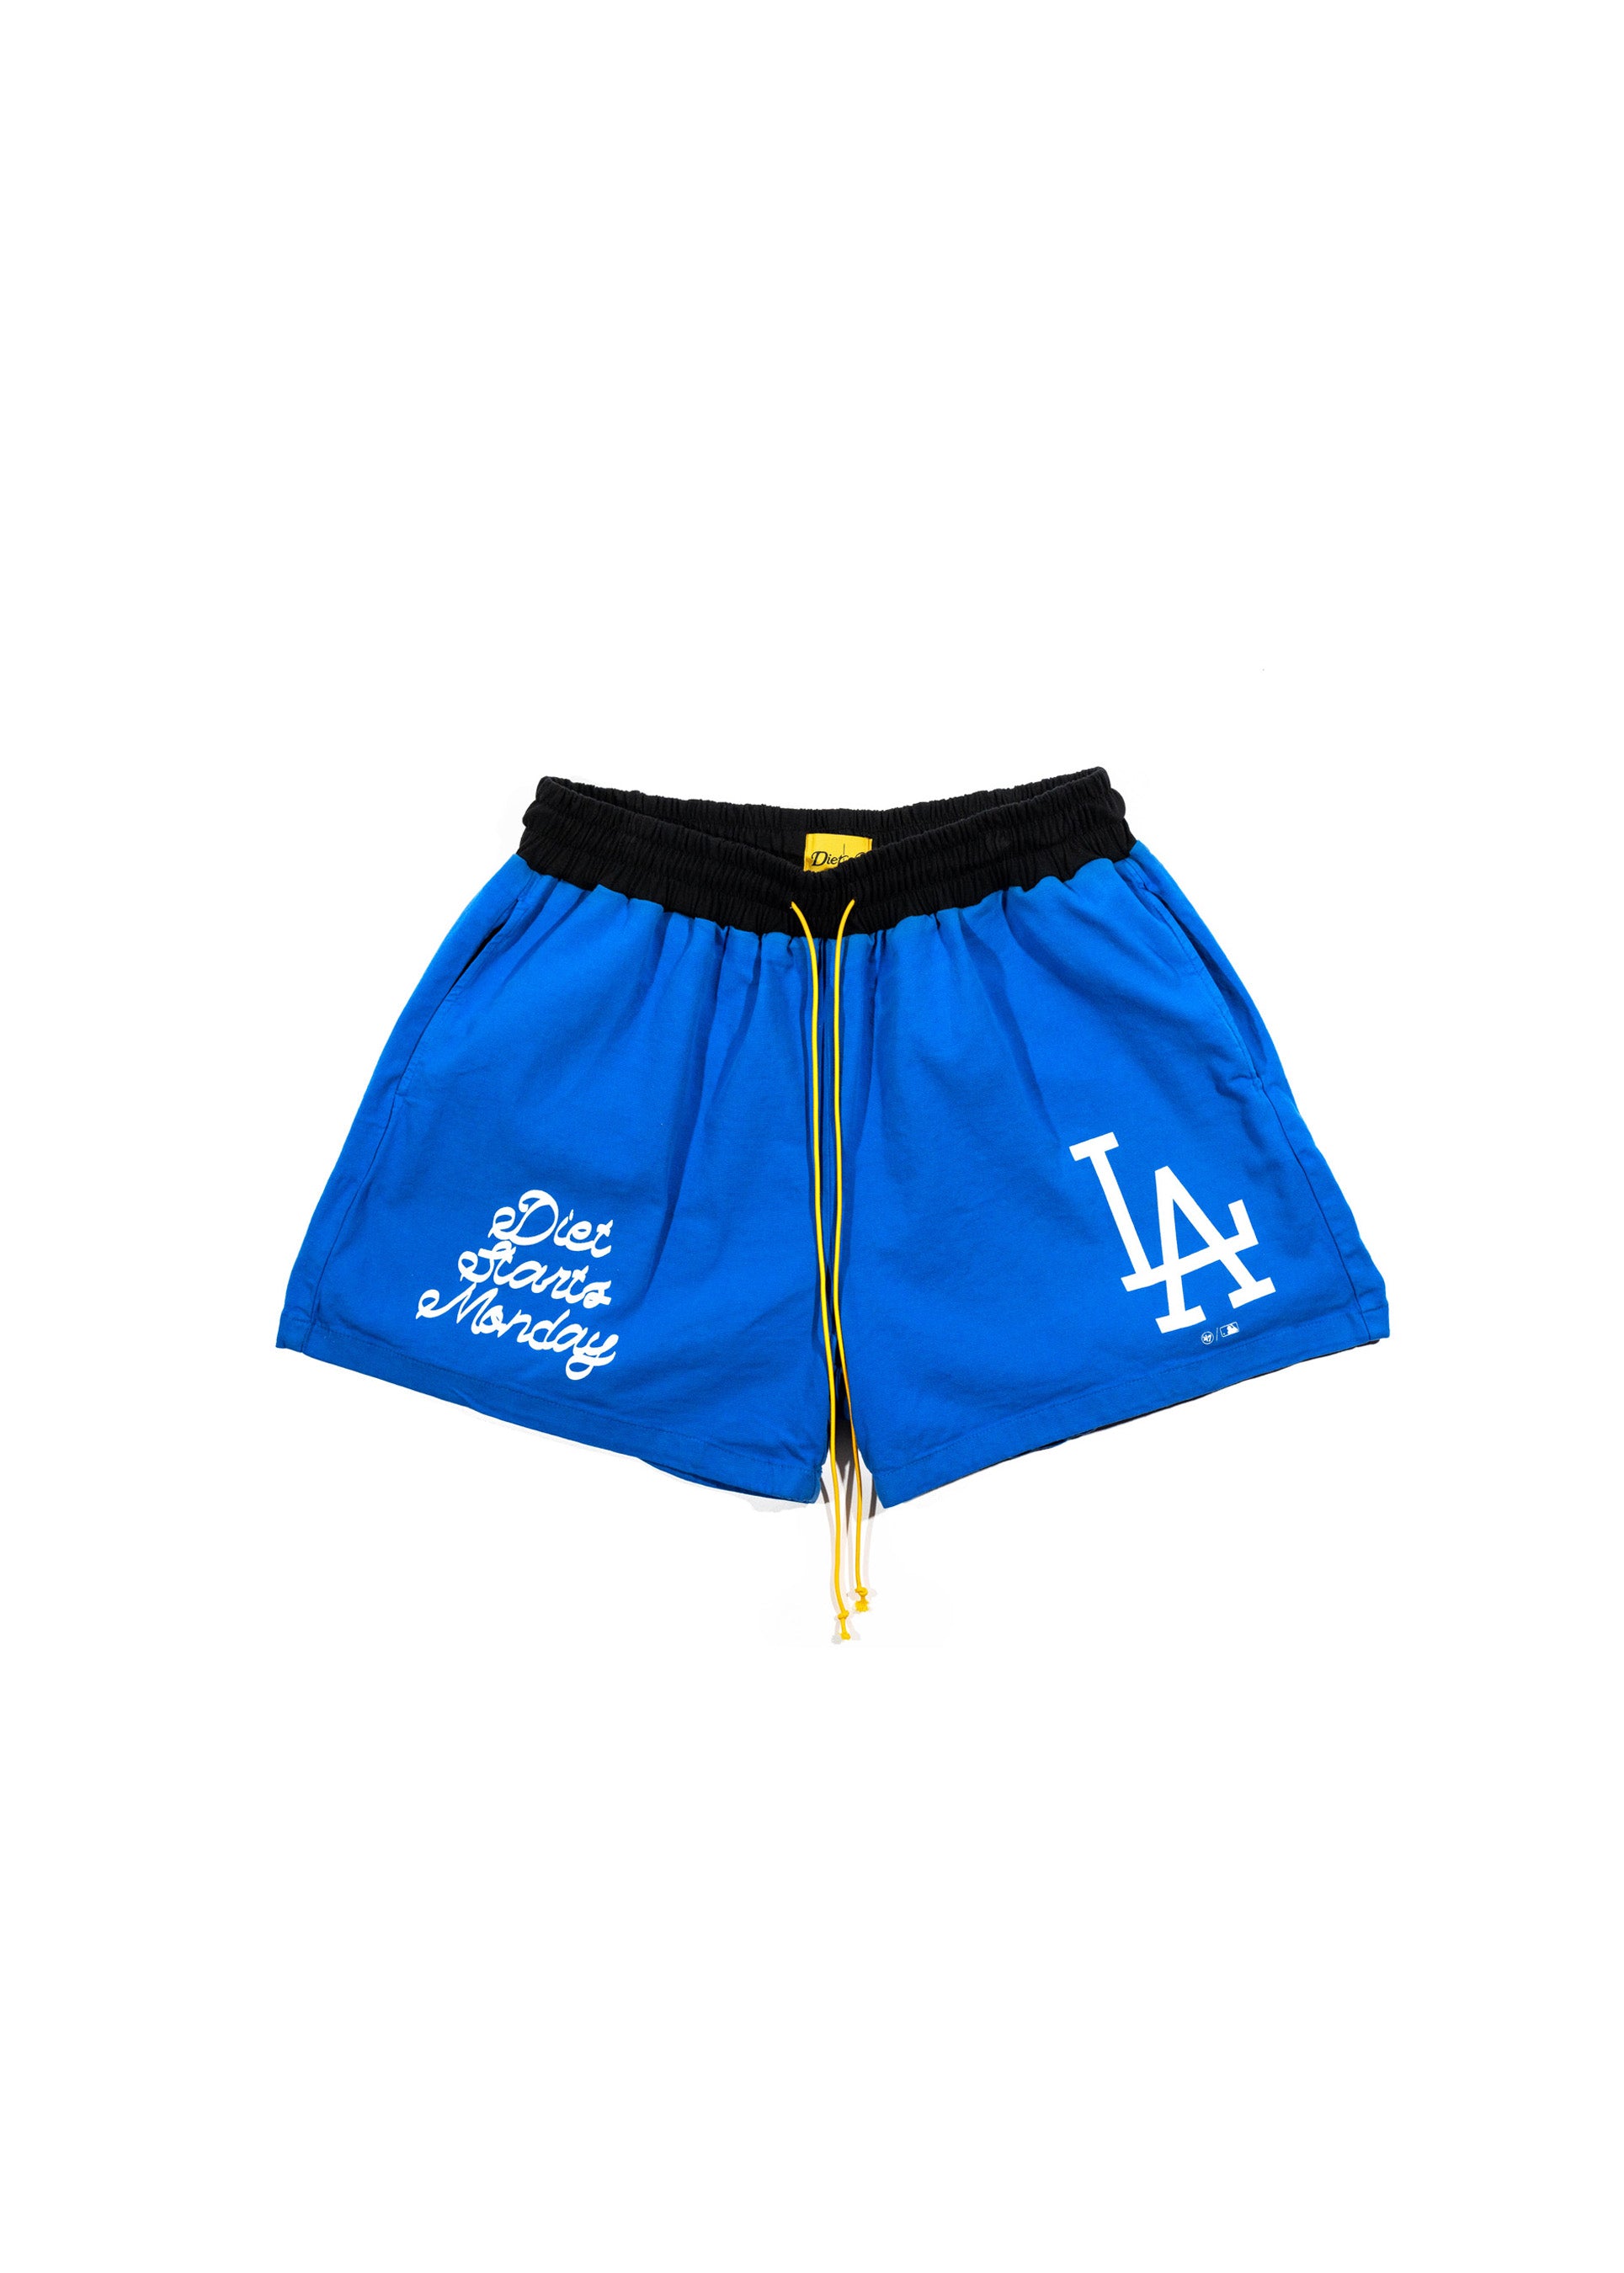 Dodgers Team Shorts - Blue